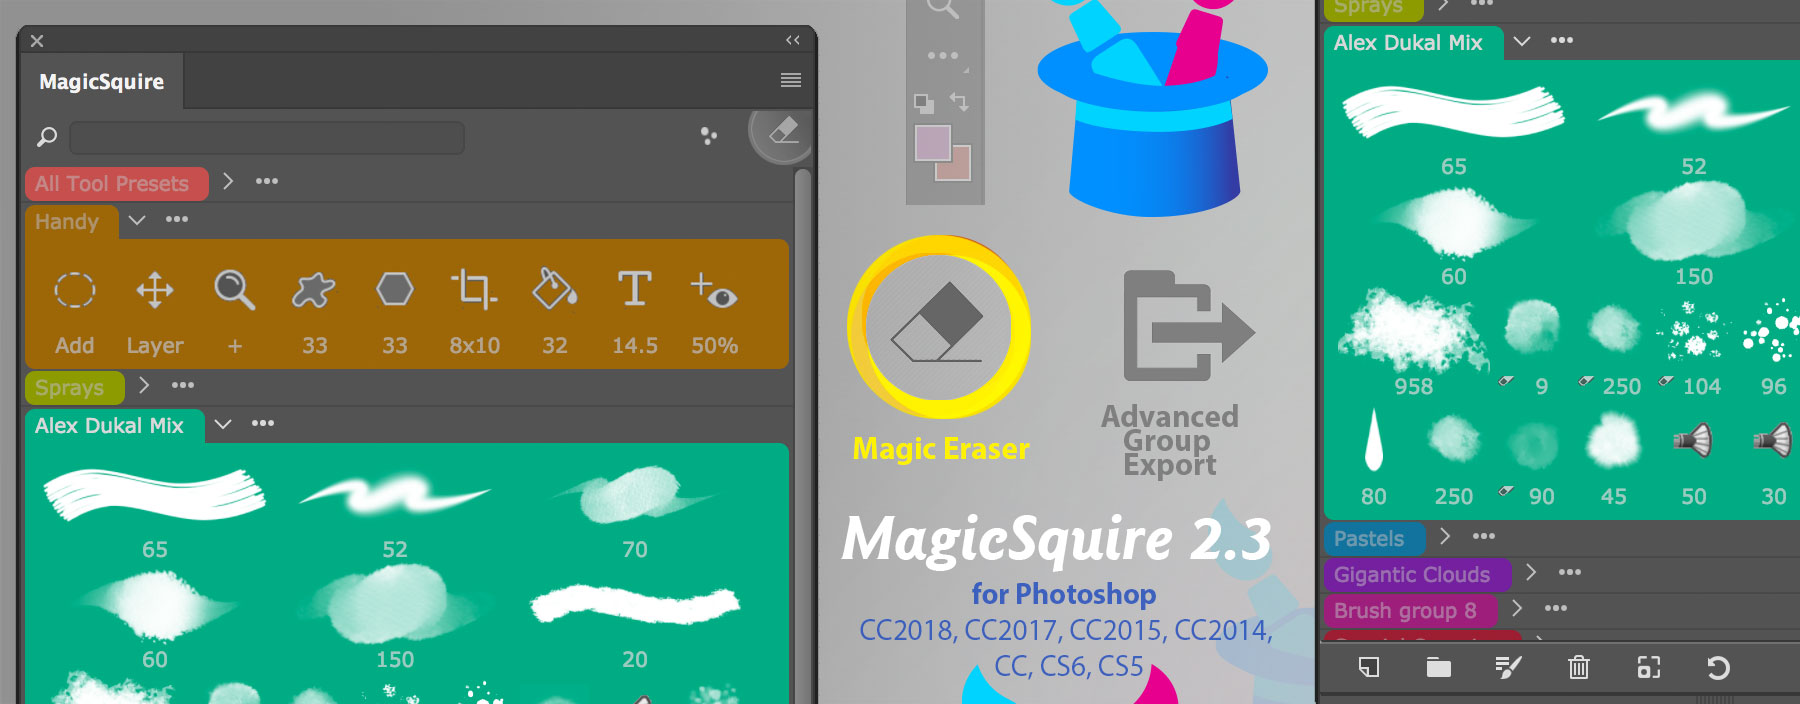 MagicSquire 2.3 adds Magic Eraser, Advanced Group Export, more!